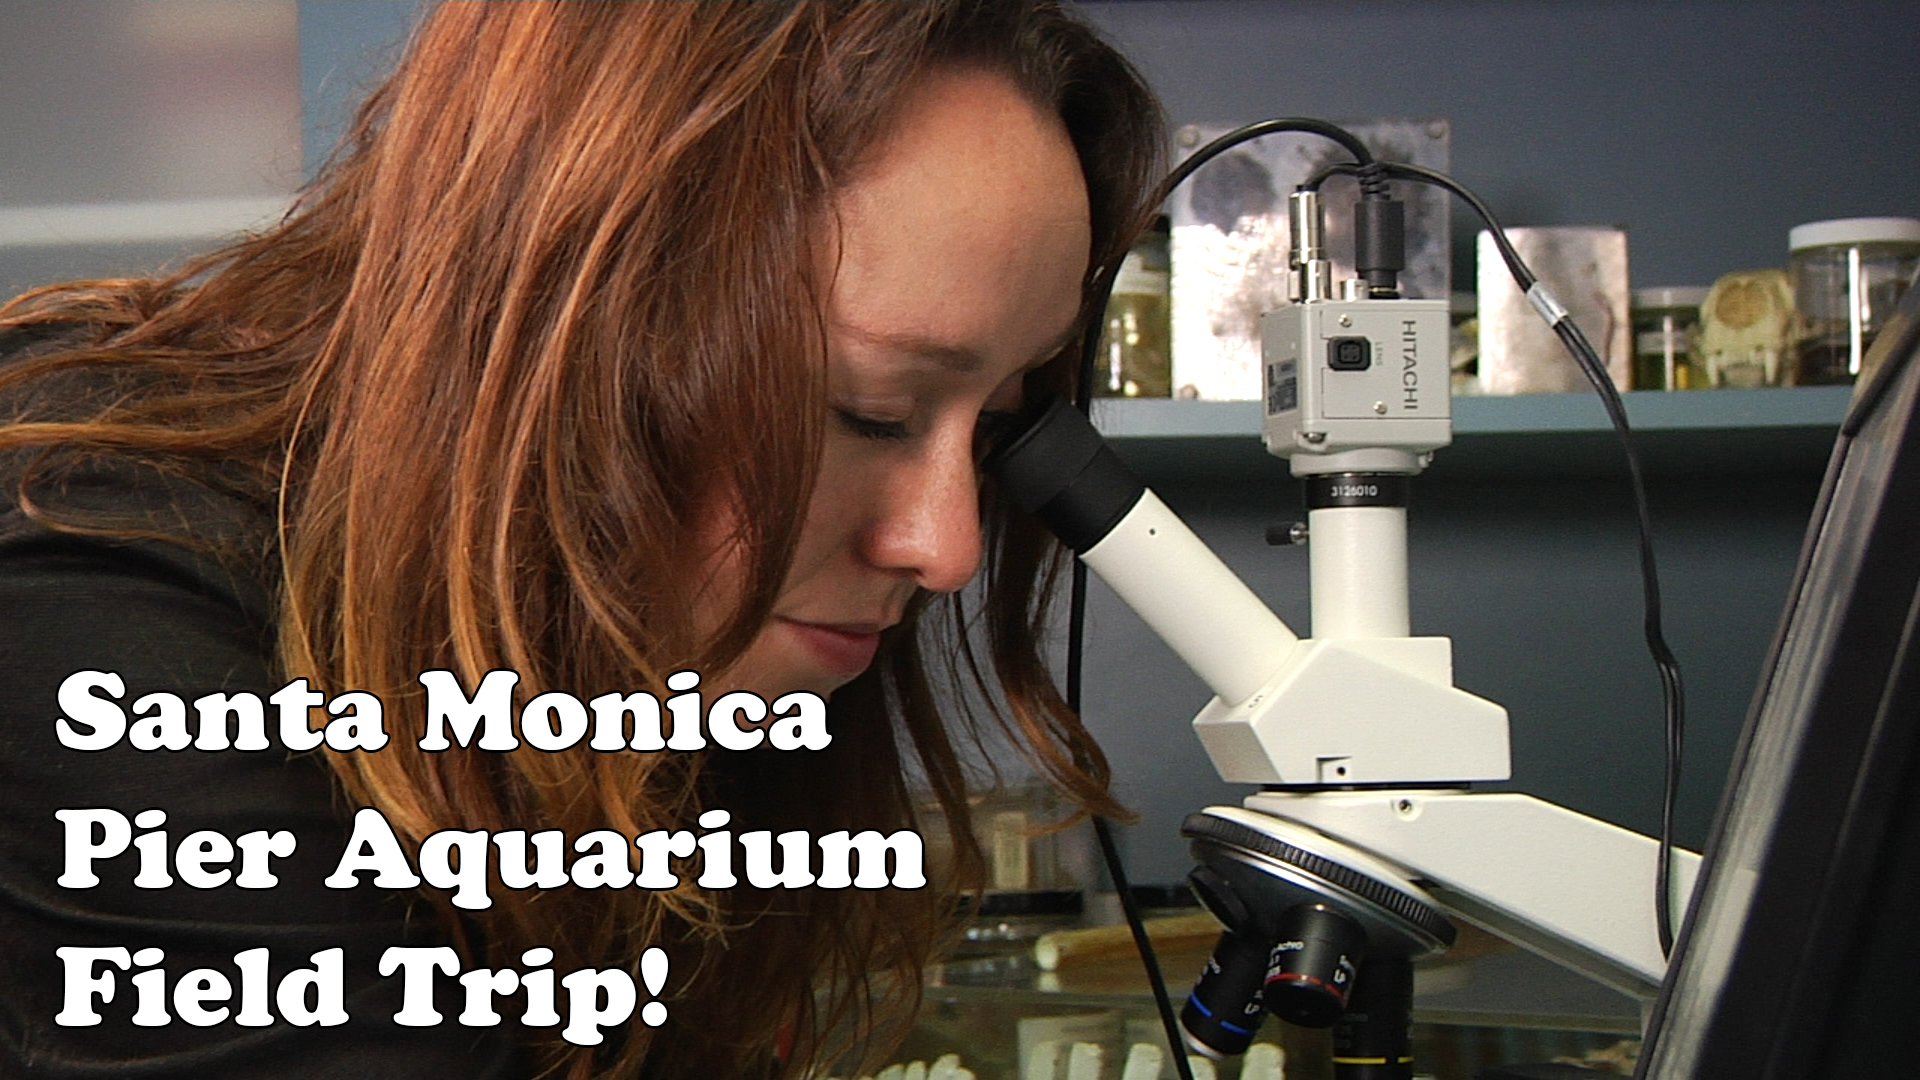 Santa Monica Pier Aquarium Field Trip!